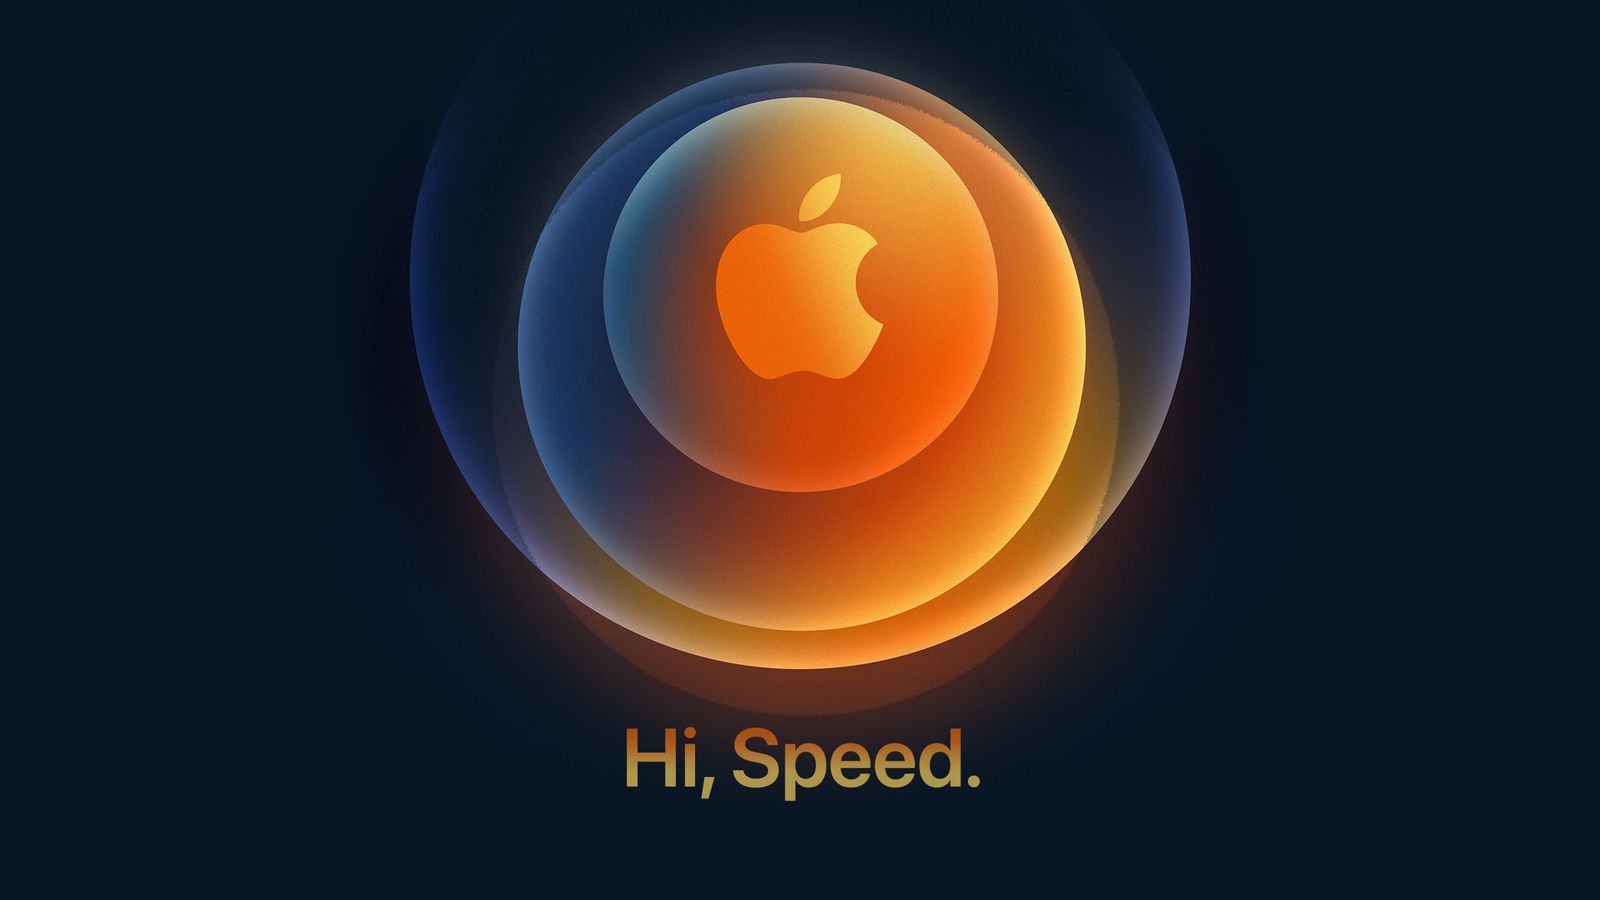 Apple Event Hashtag on Twitter Gets Another Custom Apple Logo MacRumors